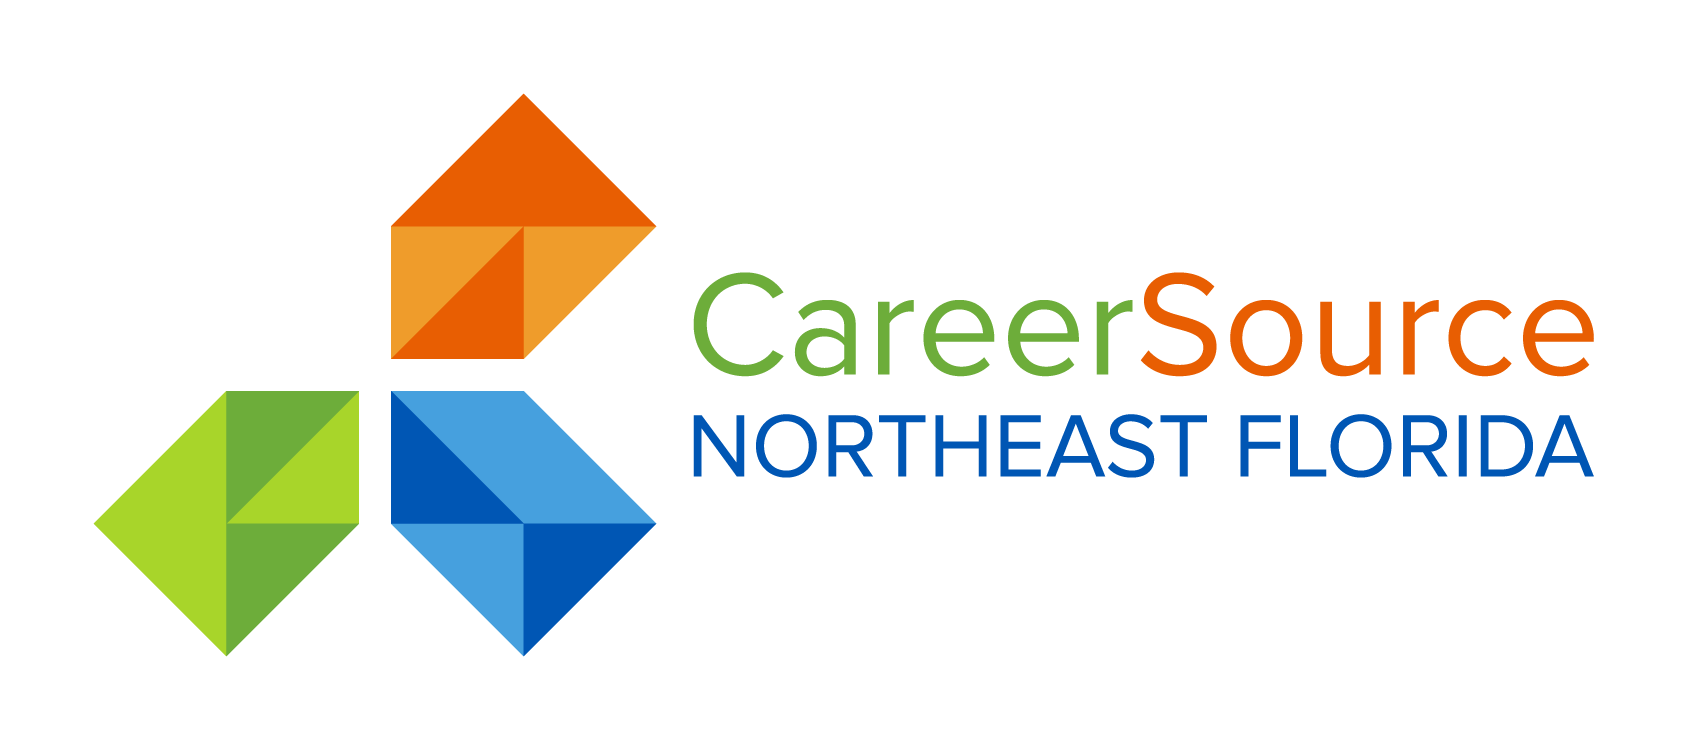 CareerSource Northeast Florida logo